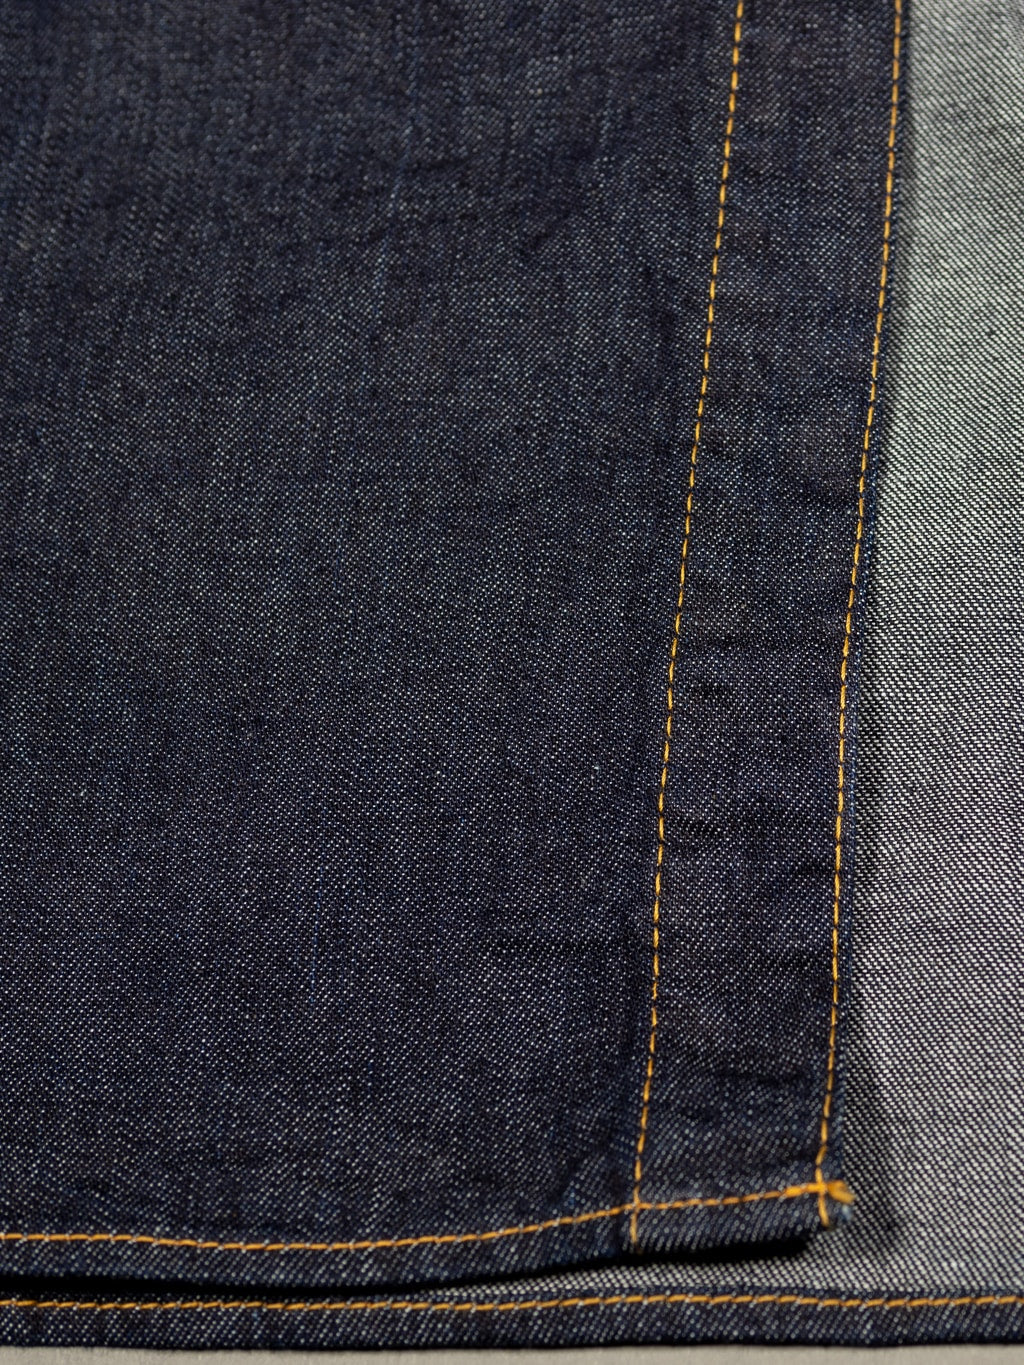 tcb jeans ranchman selvedge denim shirt soft light fabric